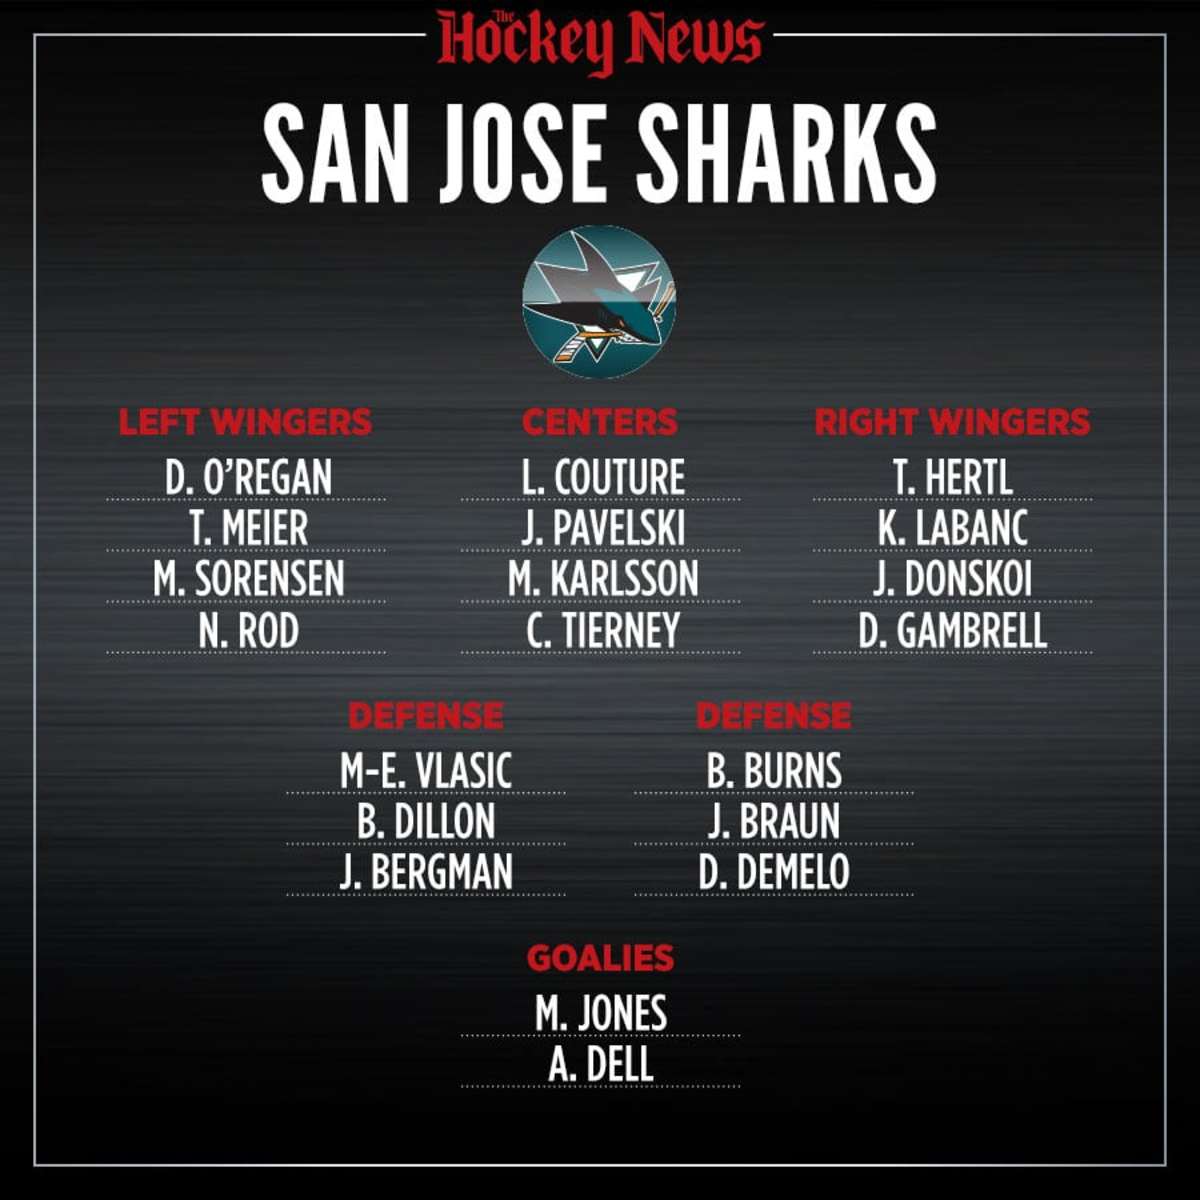 San Jose Sharks Depth Chart